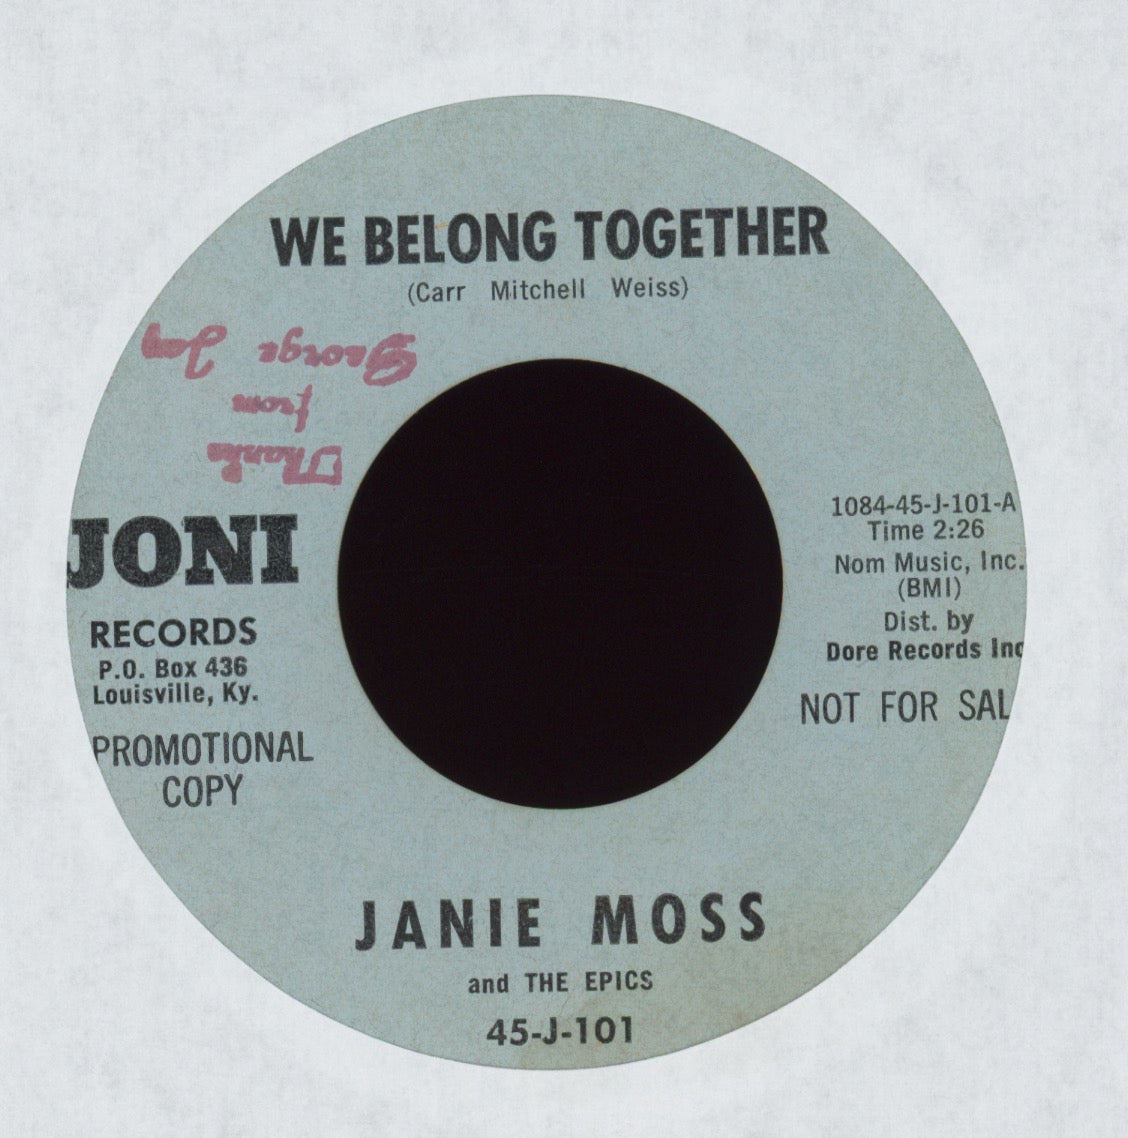 Janie Moss and The Epics - Baltimore on Joni Promo